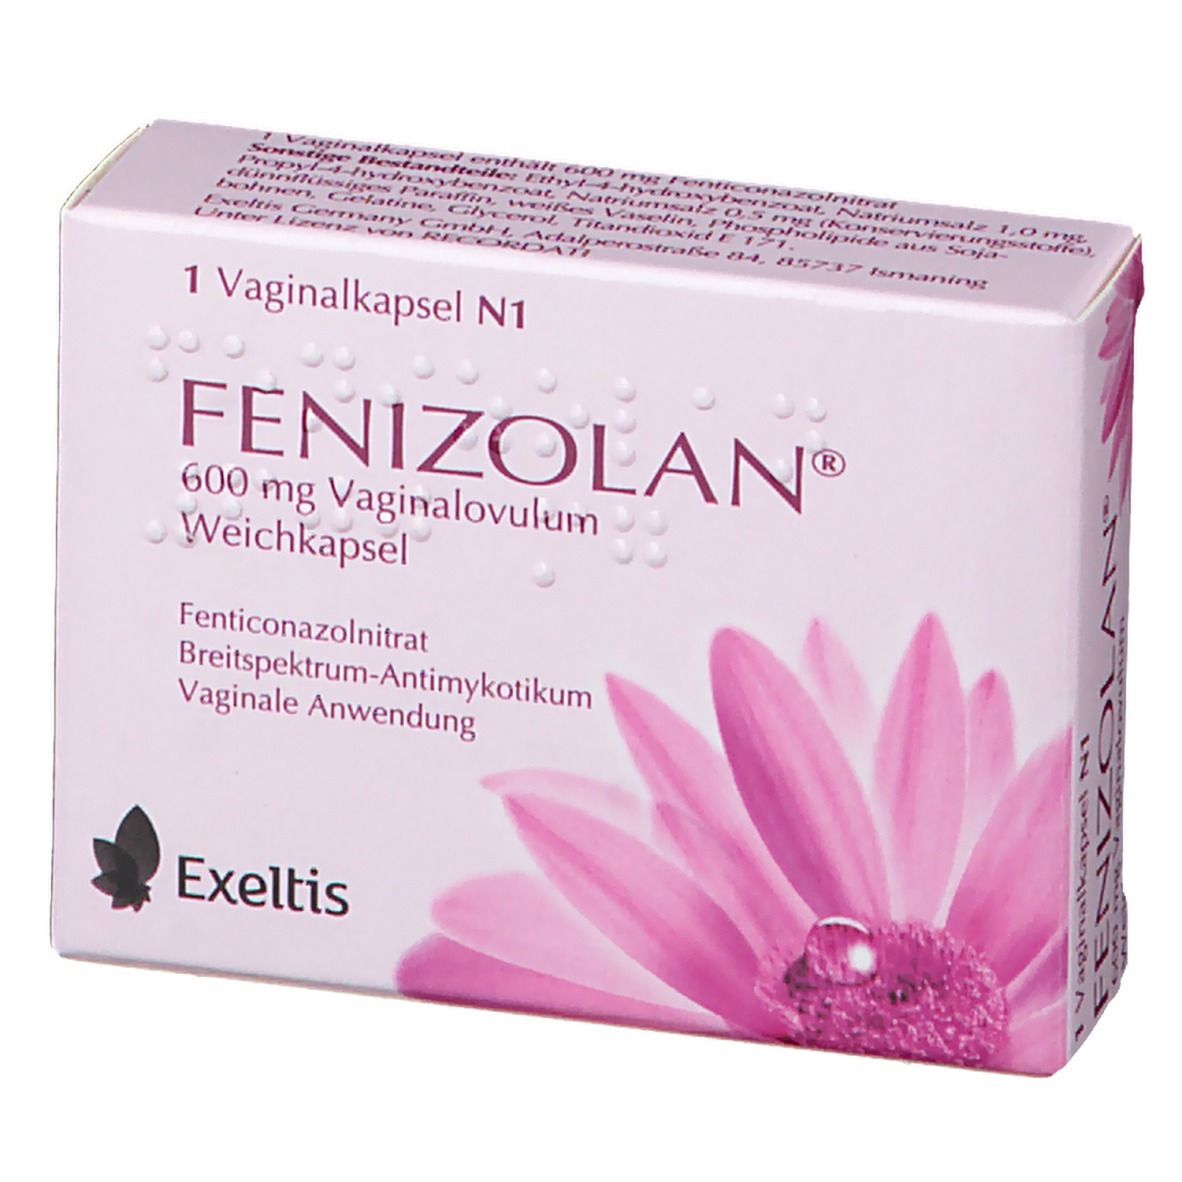 Fenizolan® Vaginalovulum